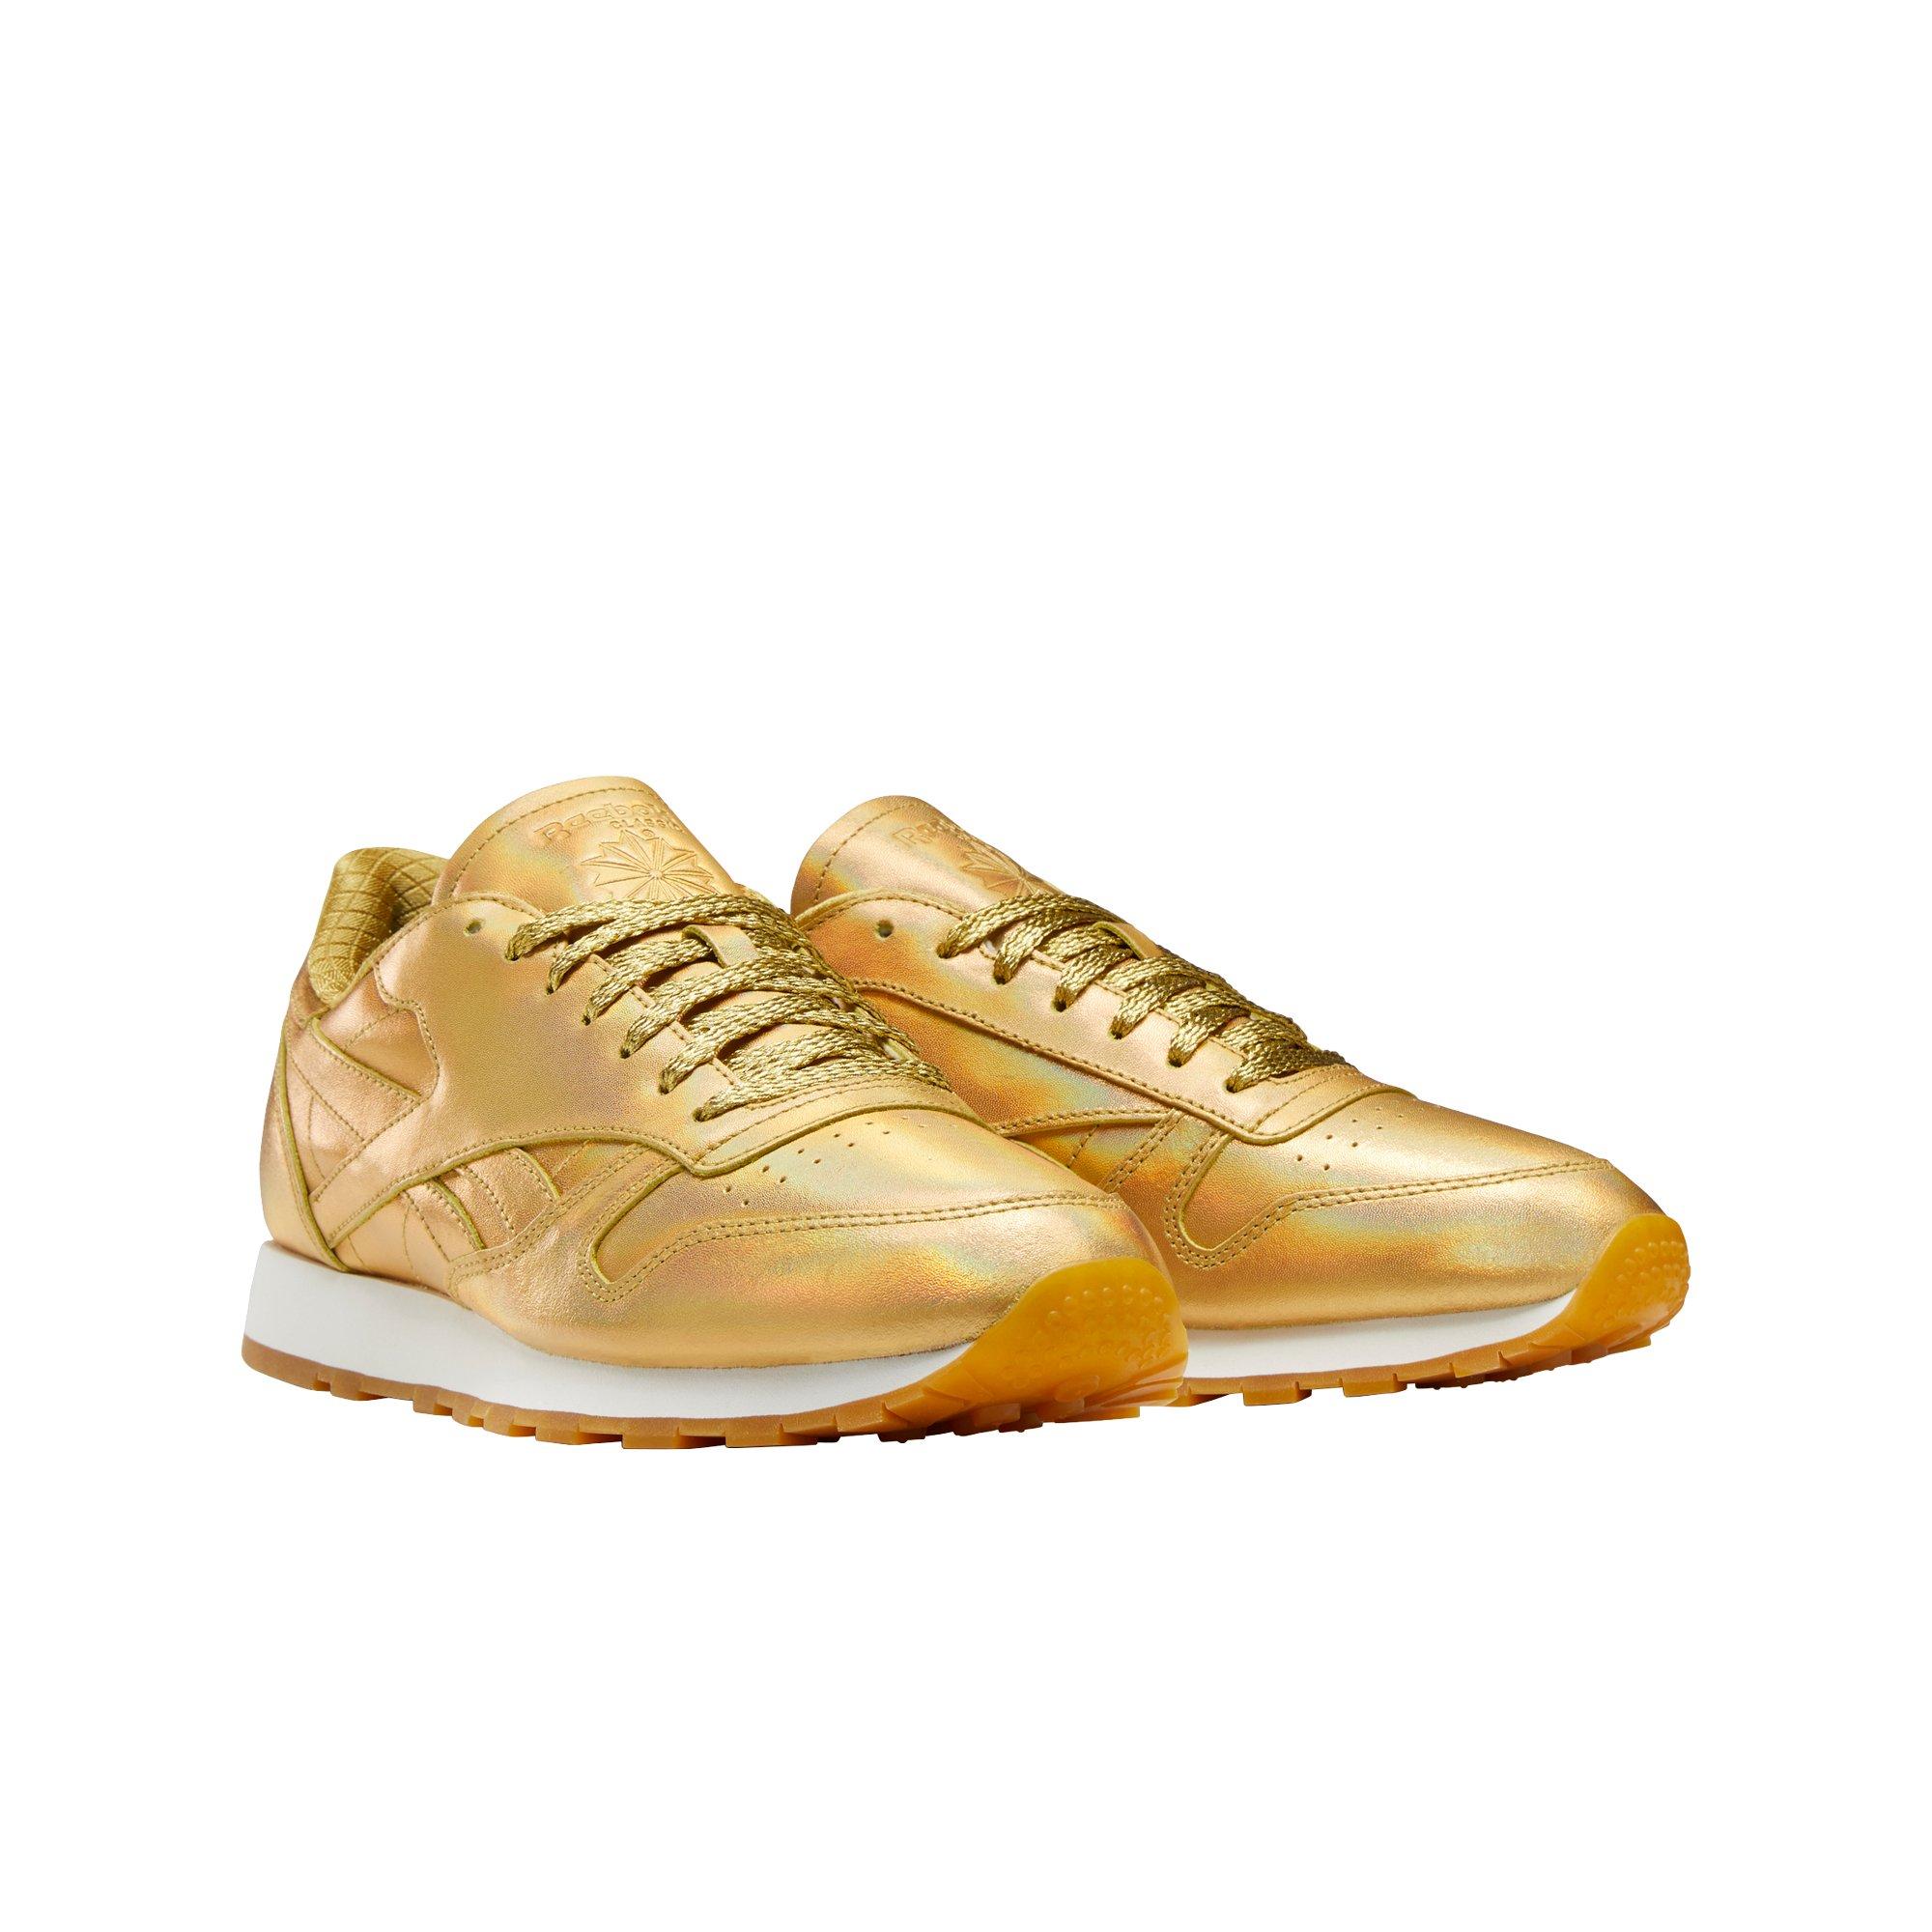 Reebok Classic Leather MU "Gold" Unisex Shoe - | City